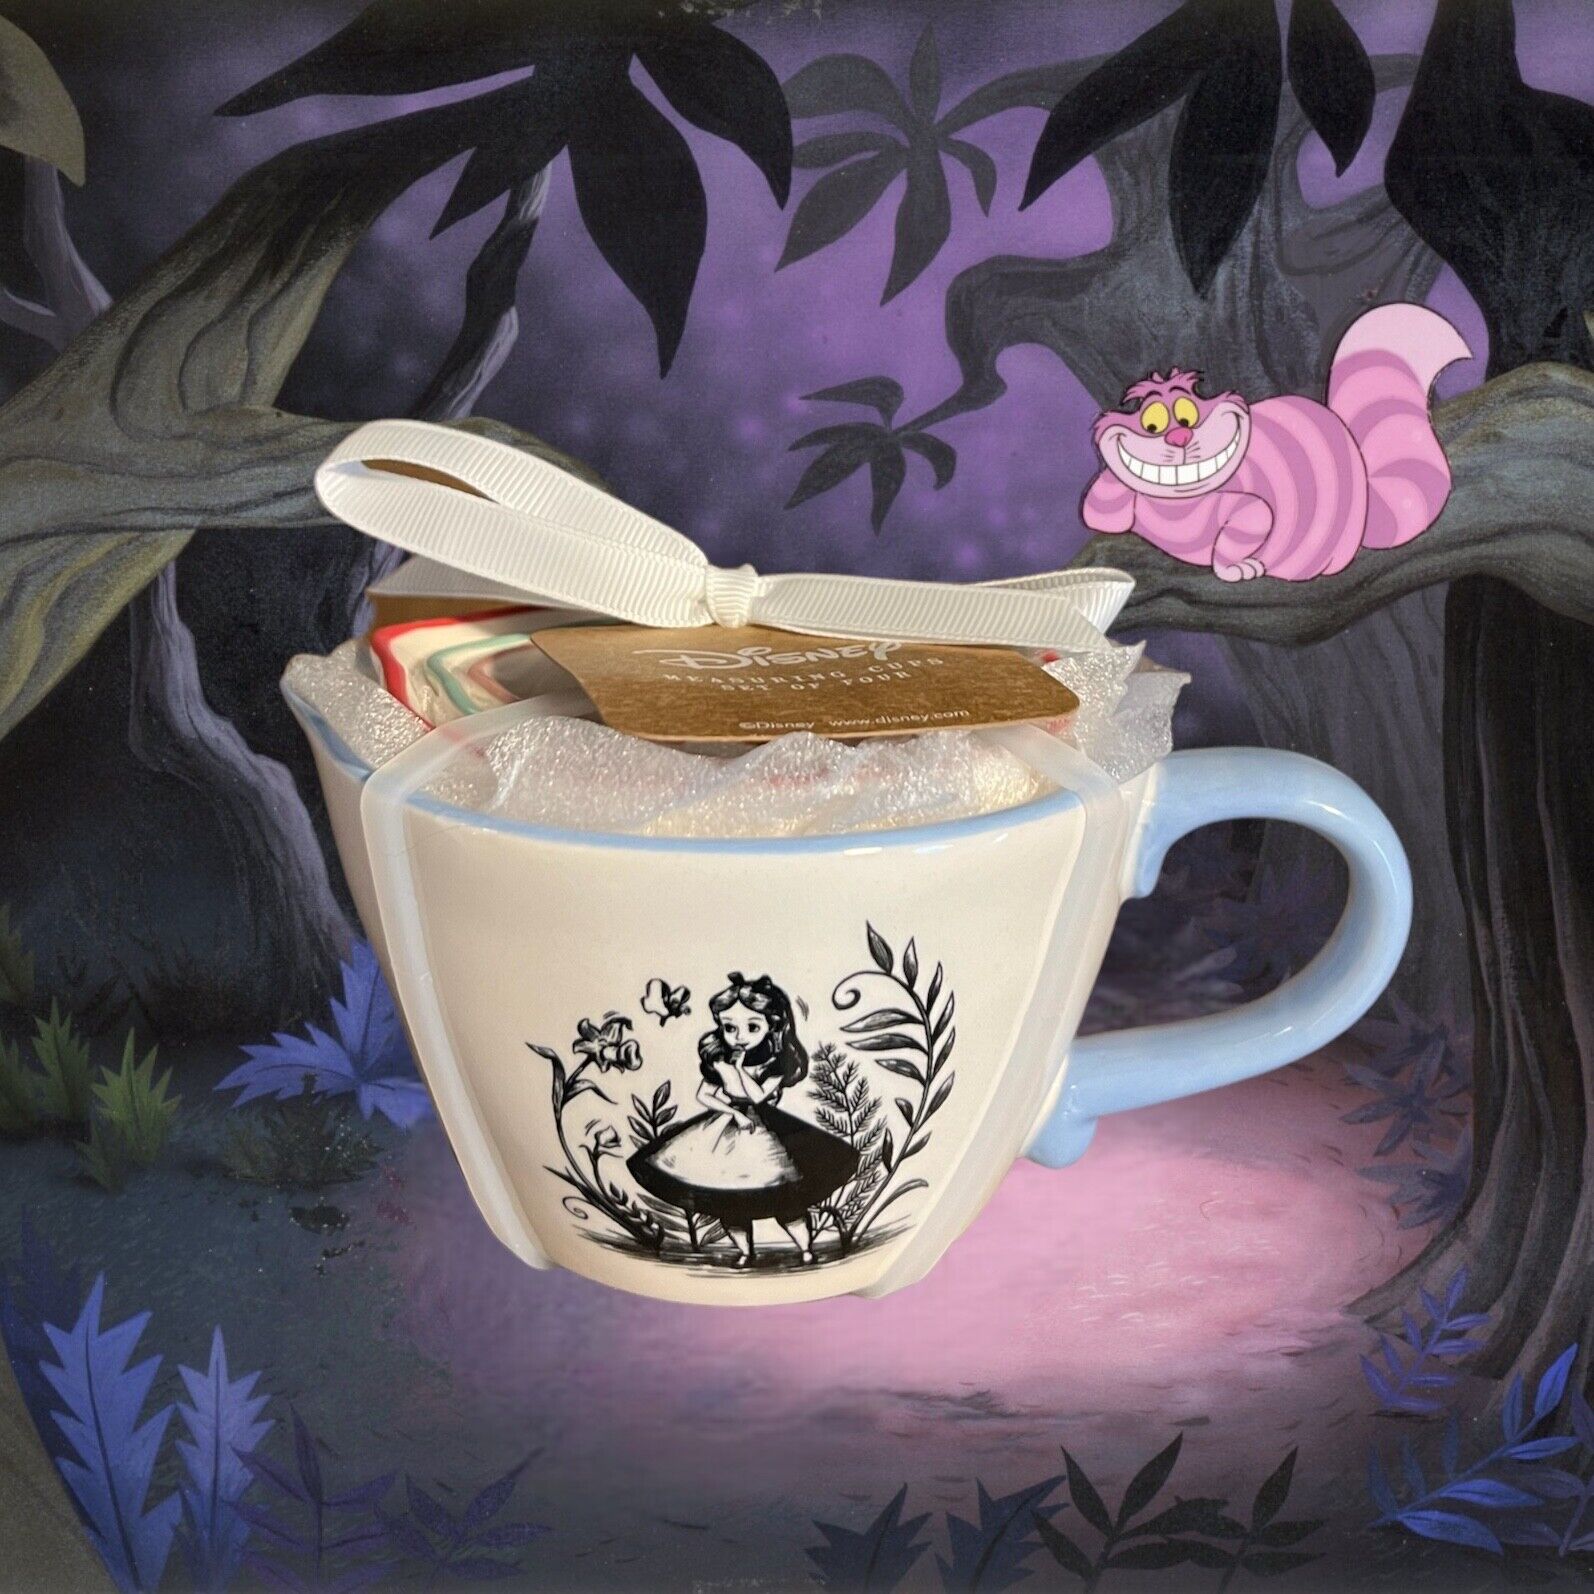 BRAND NEW Rae Dunn & Disney Alice in Wonderland Measuring Cups